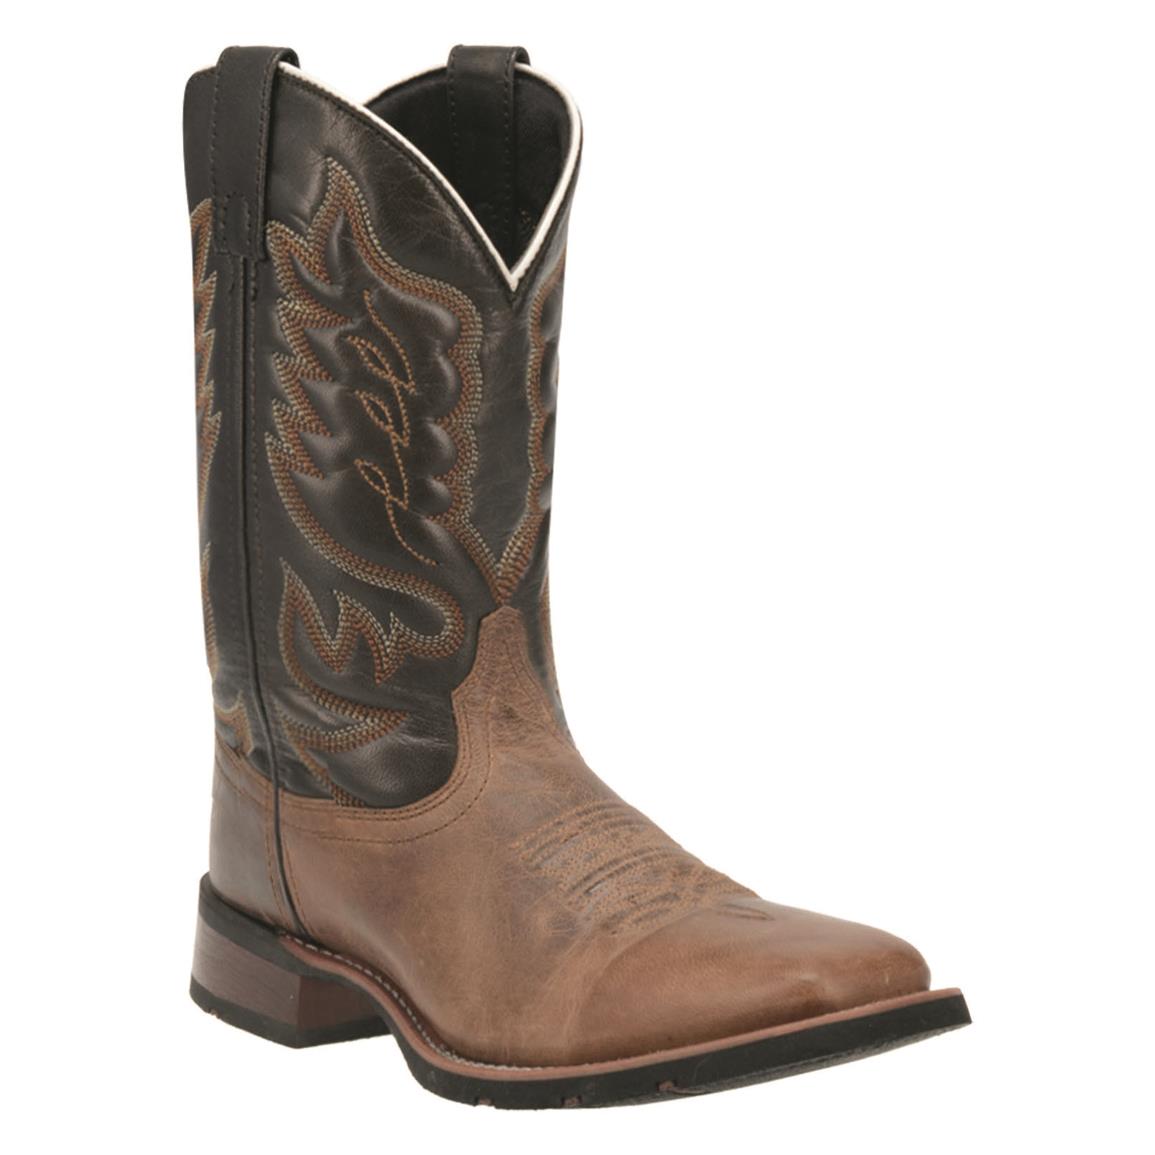 Laredo Men's Montana Leather Western Boots, Sand/Chocolate